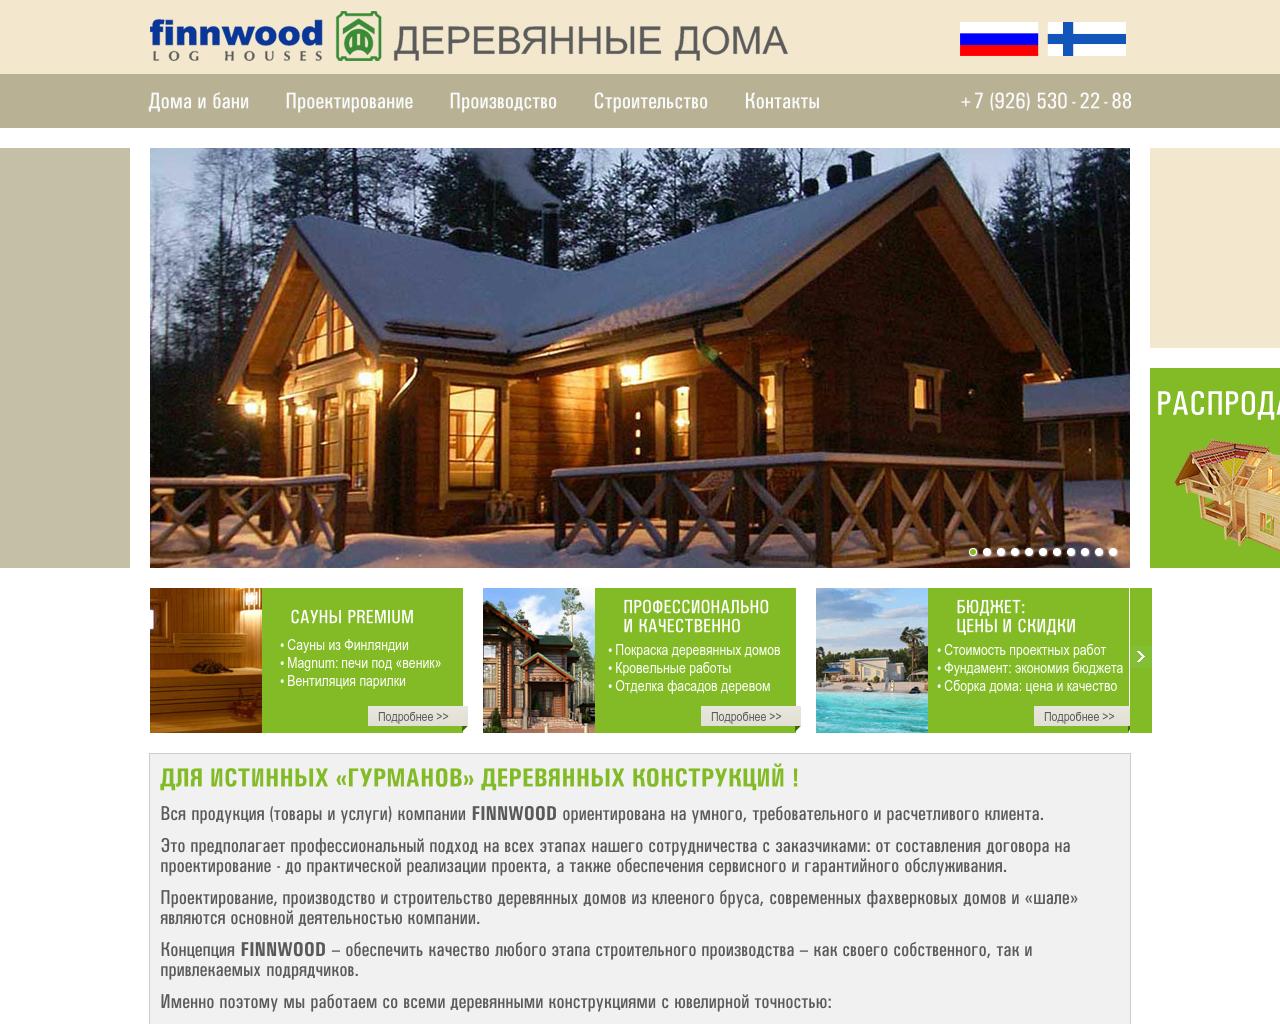 Изображение сайта finnwood.ru в разрешении 1280x1024